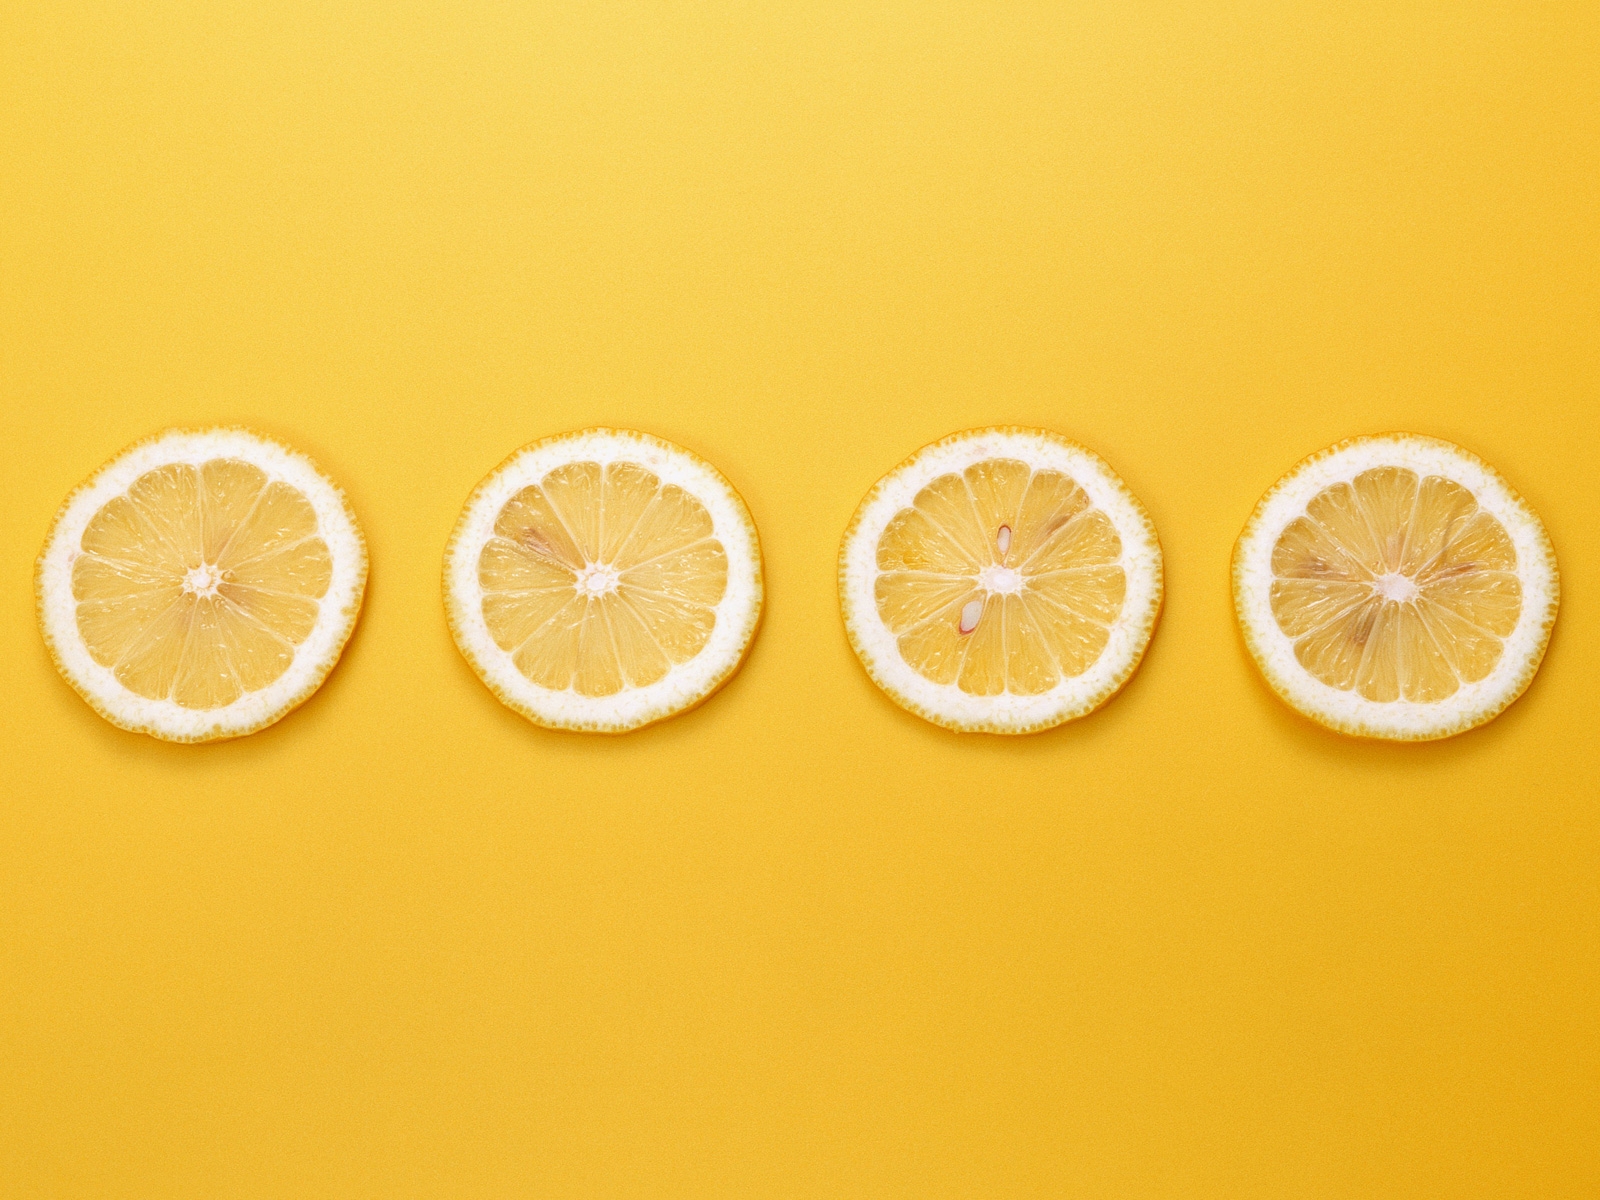 Lemon Slices Wallpaper Stock Photos